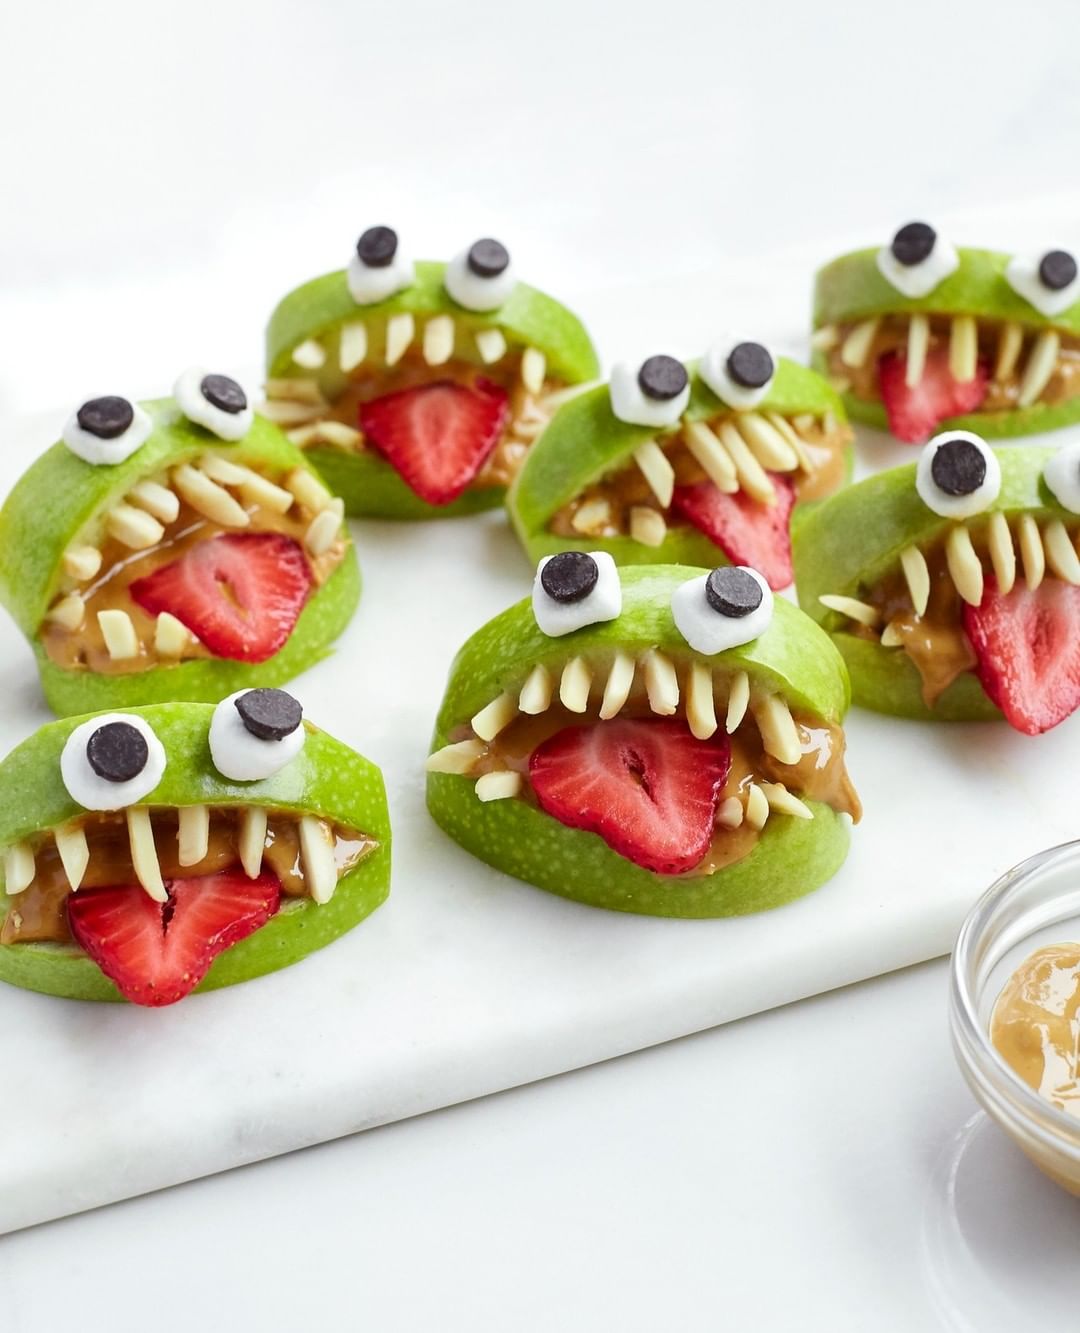 20+ Halloween Food Ideas For Spooky Treats